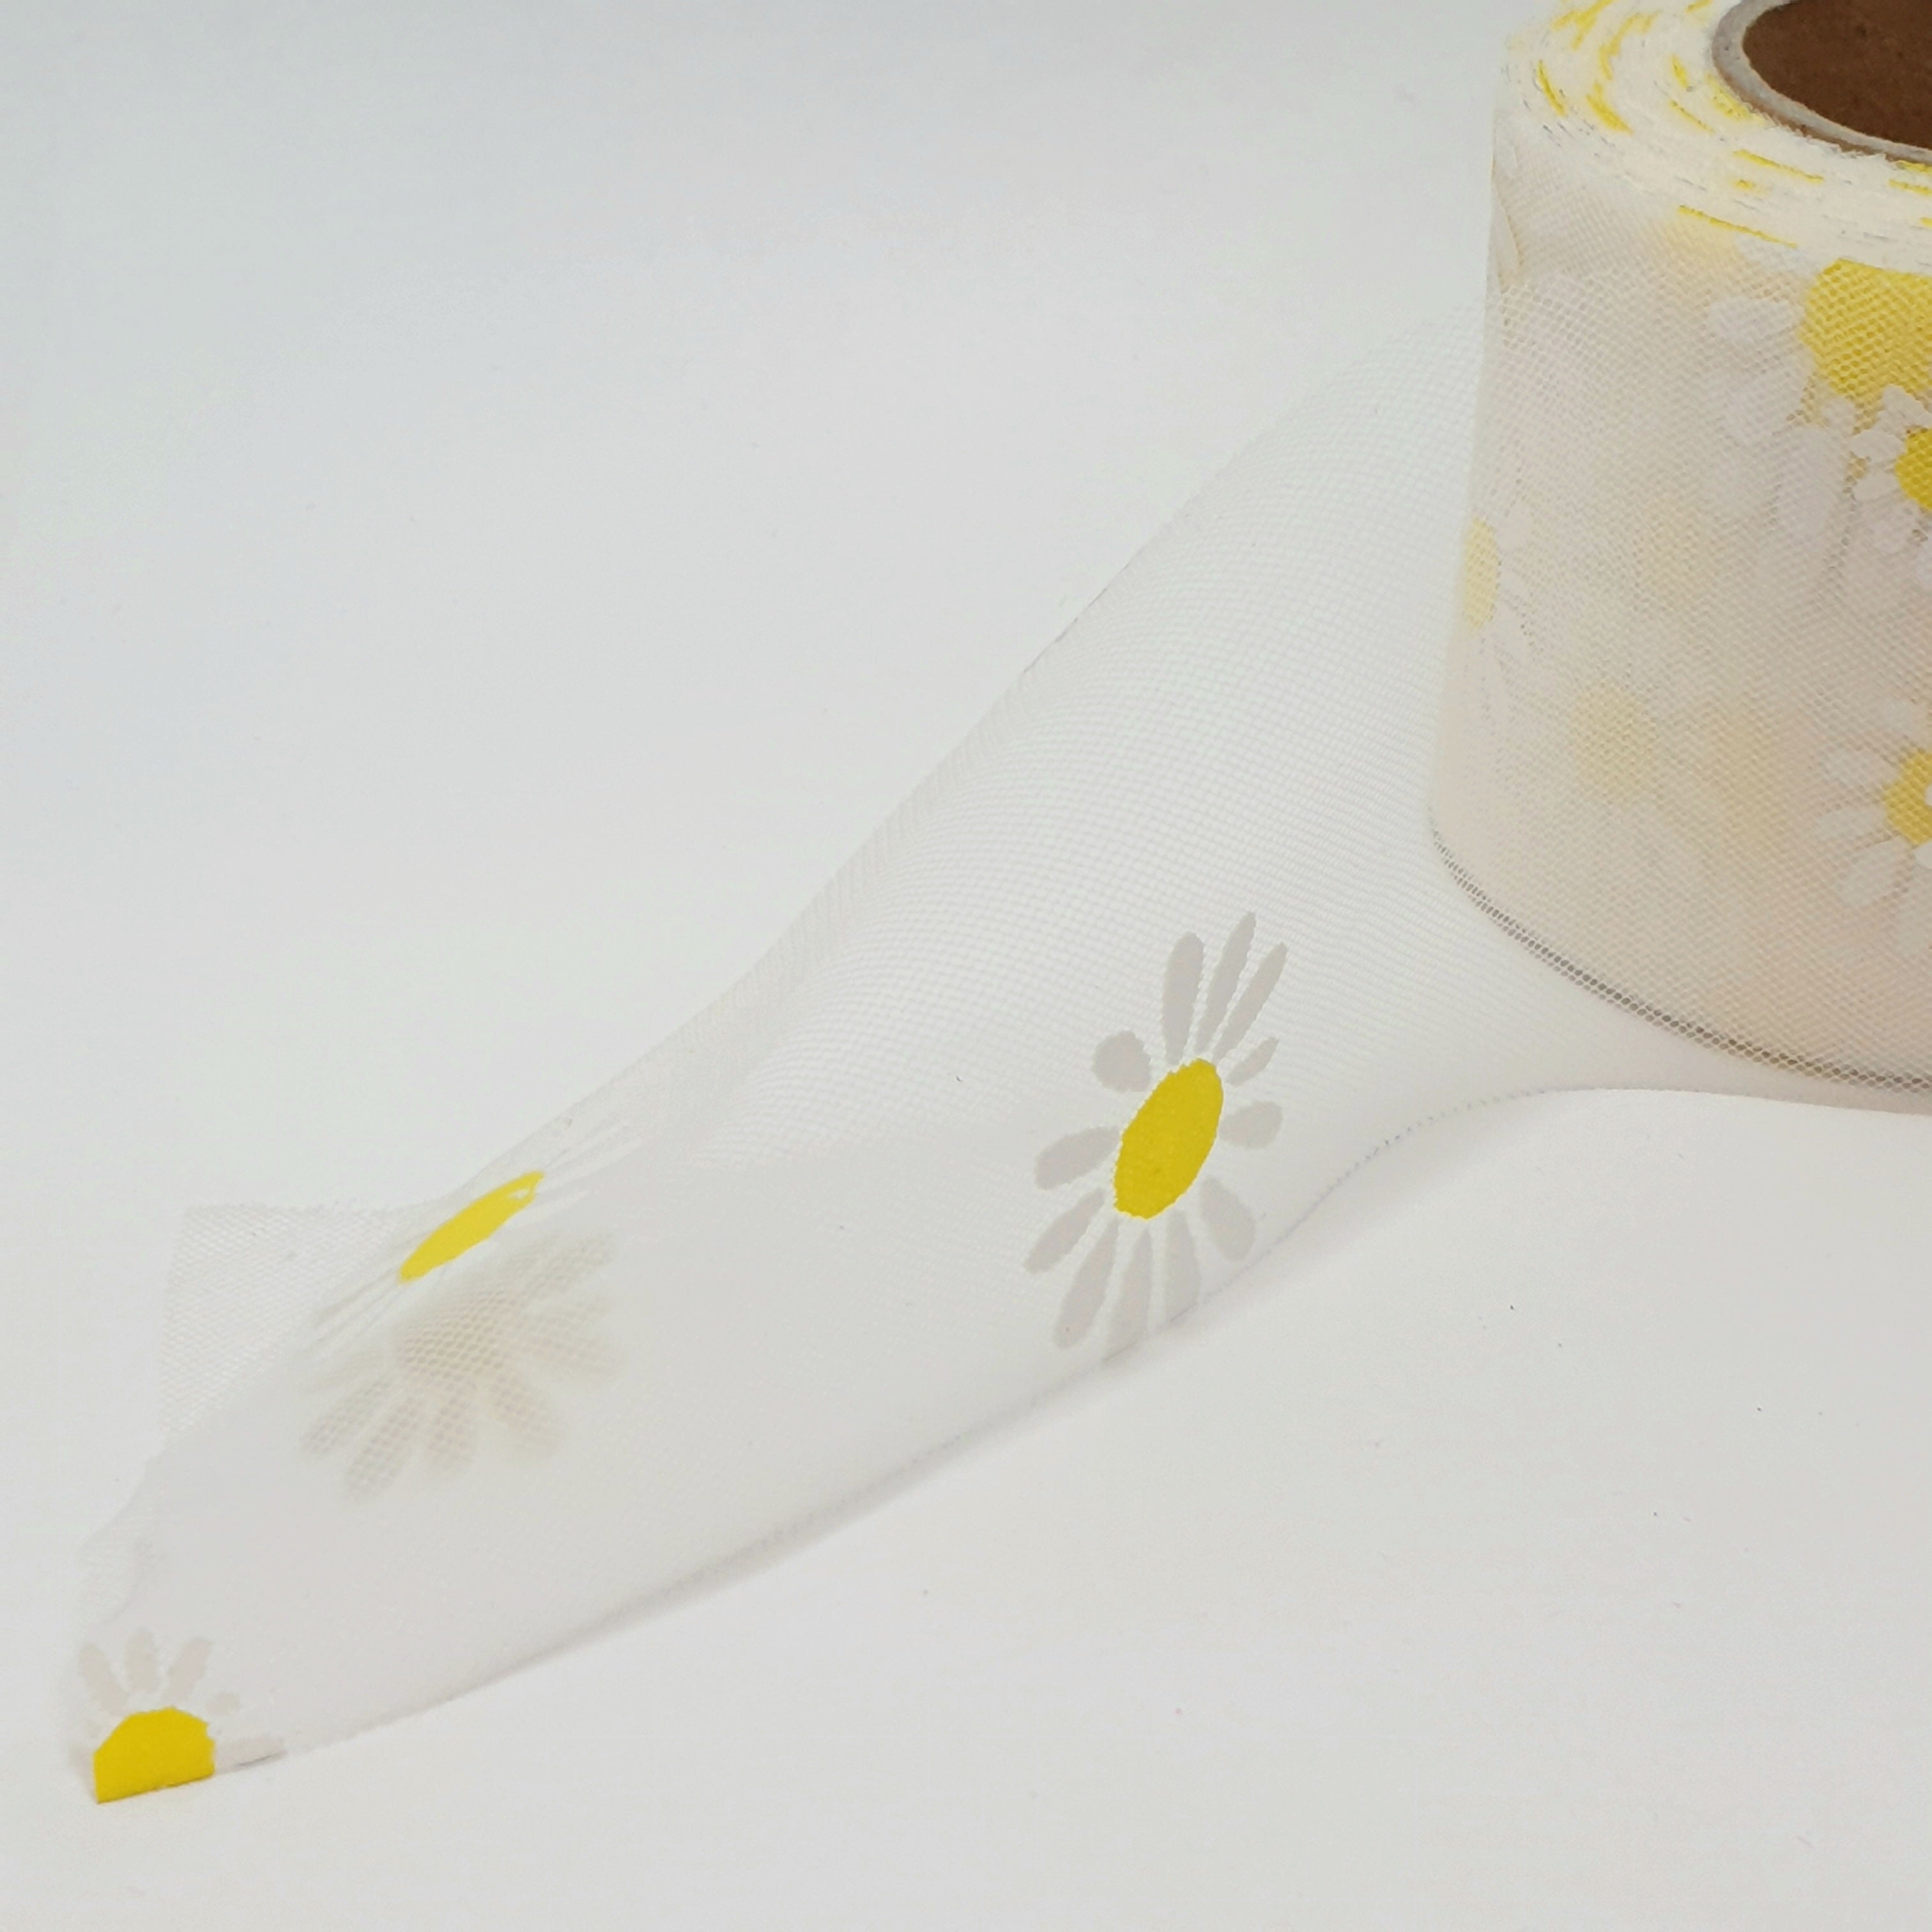 MajorCrafts 60mm 22metres Cream & White Daisy Flower Tulle Mesh Ribbon